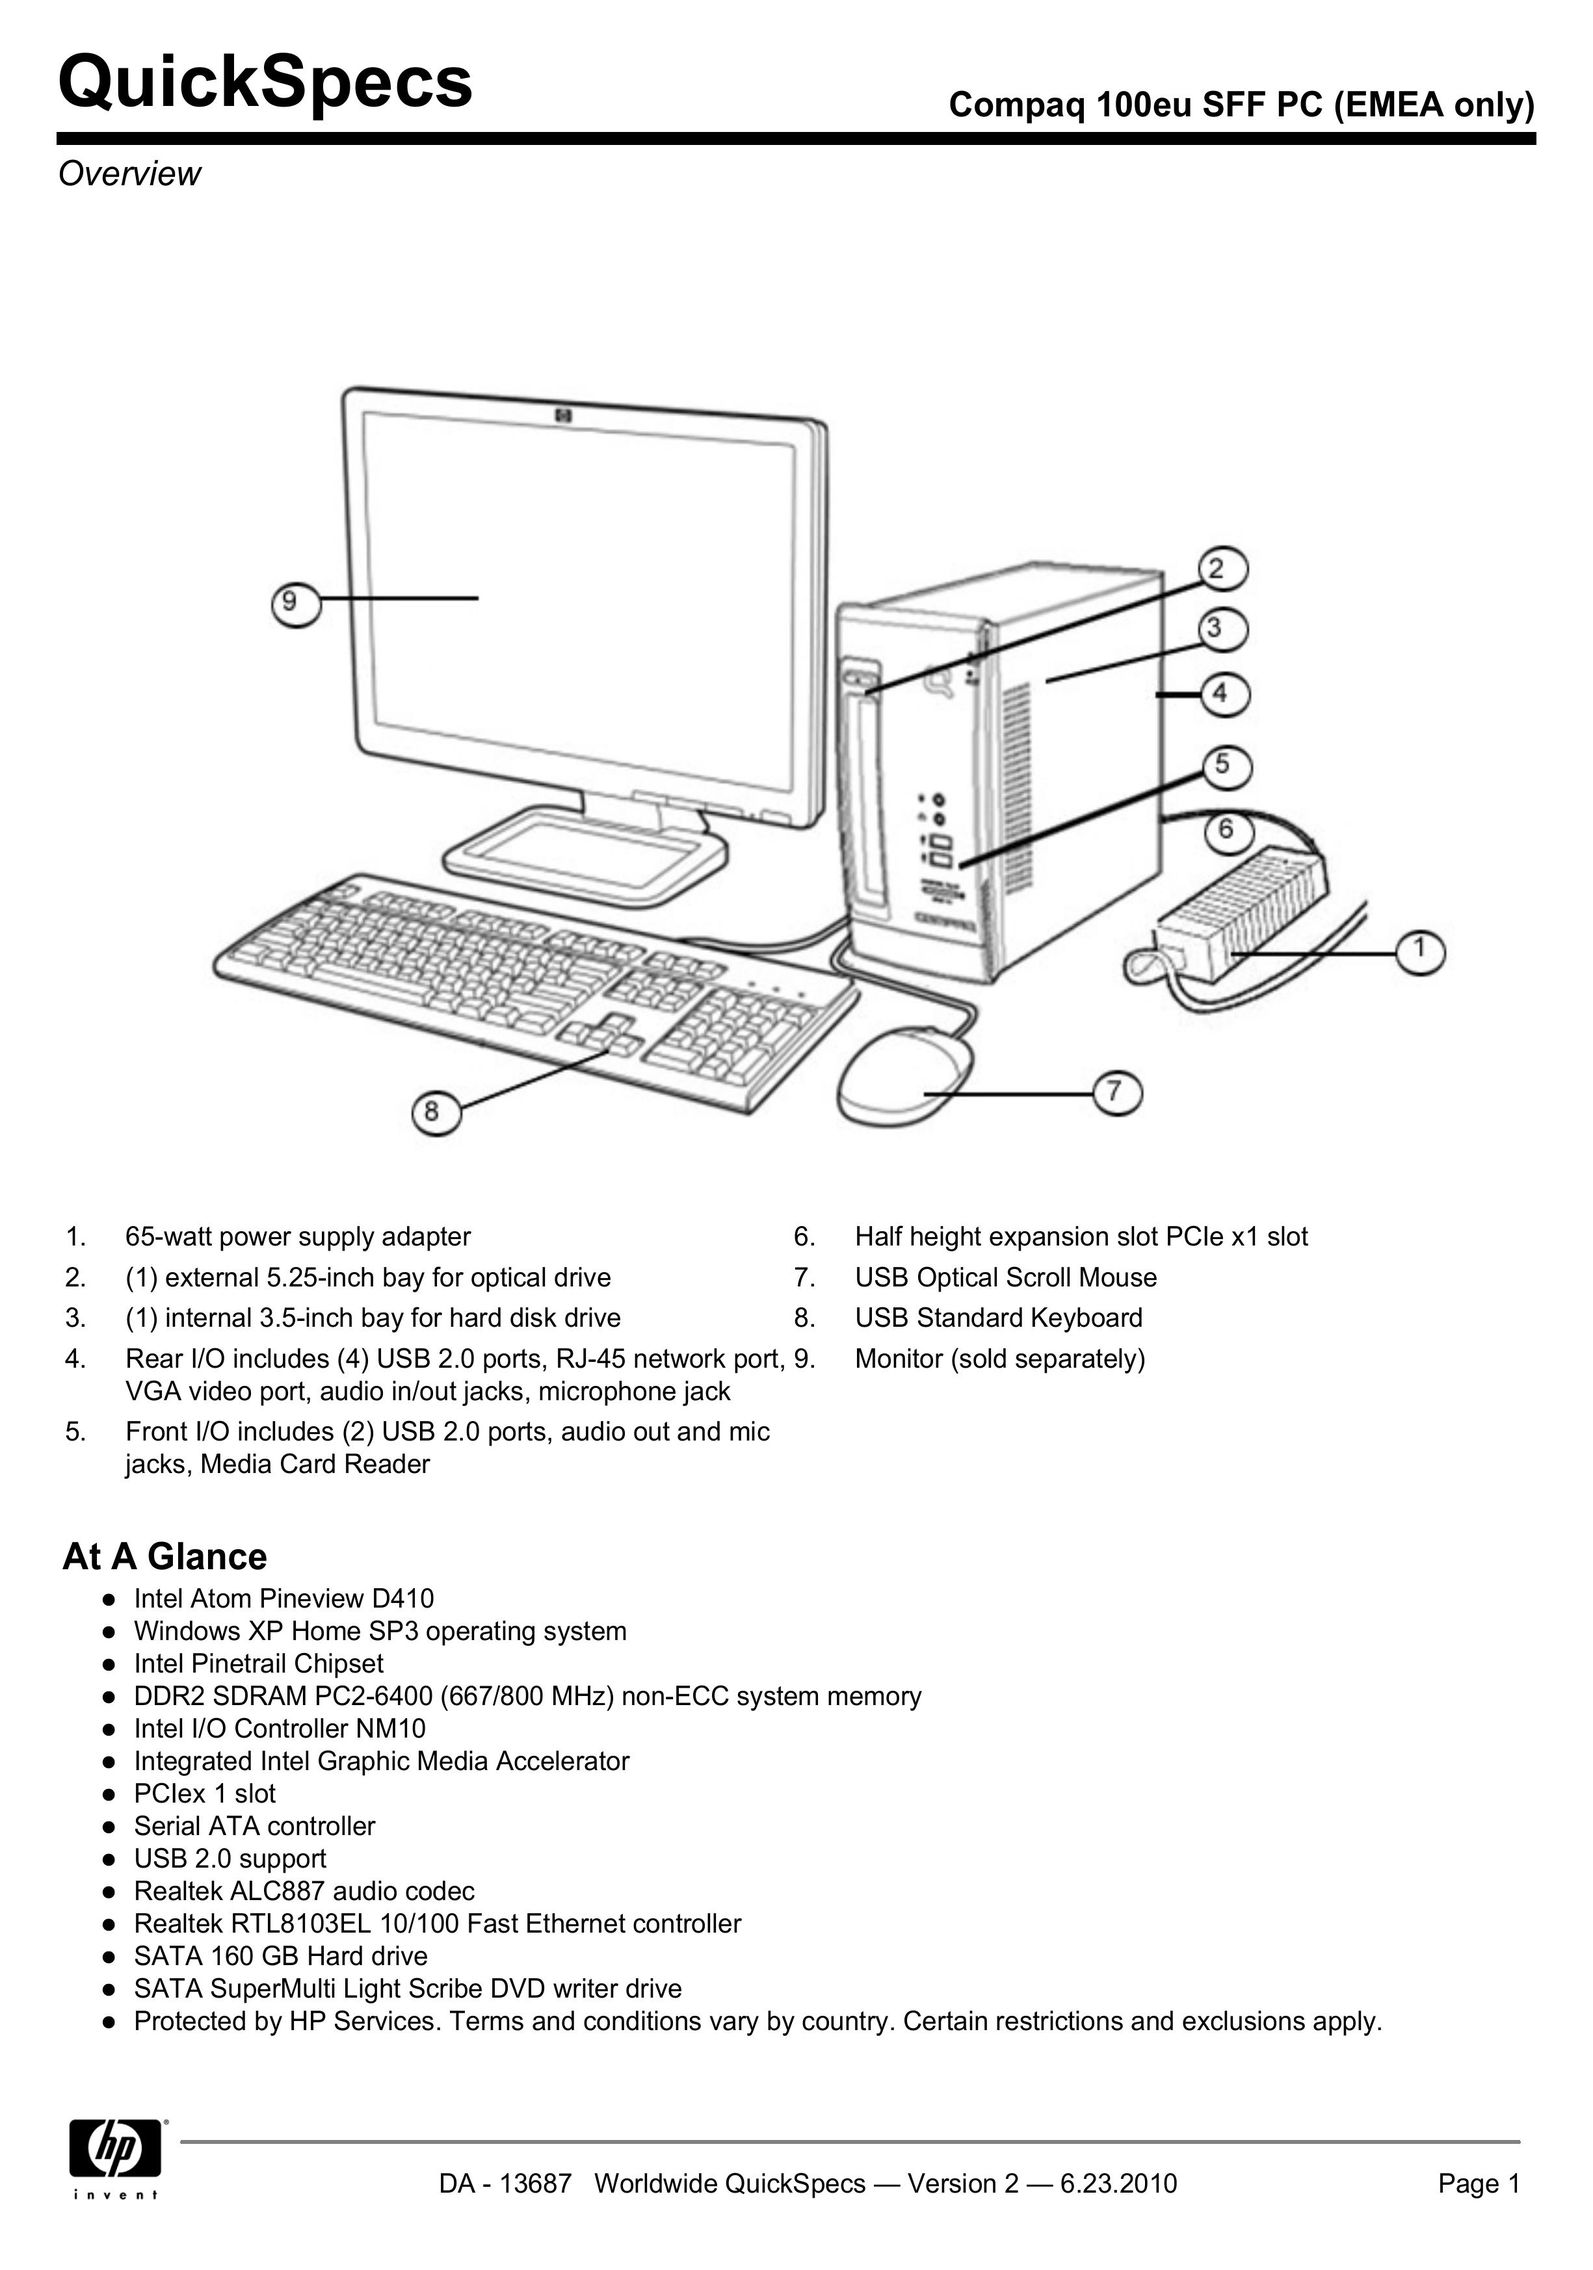 HP (Hewlett-Packard) 100EU SFF PC Personal Computer User Manual